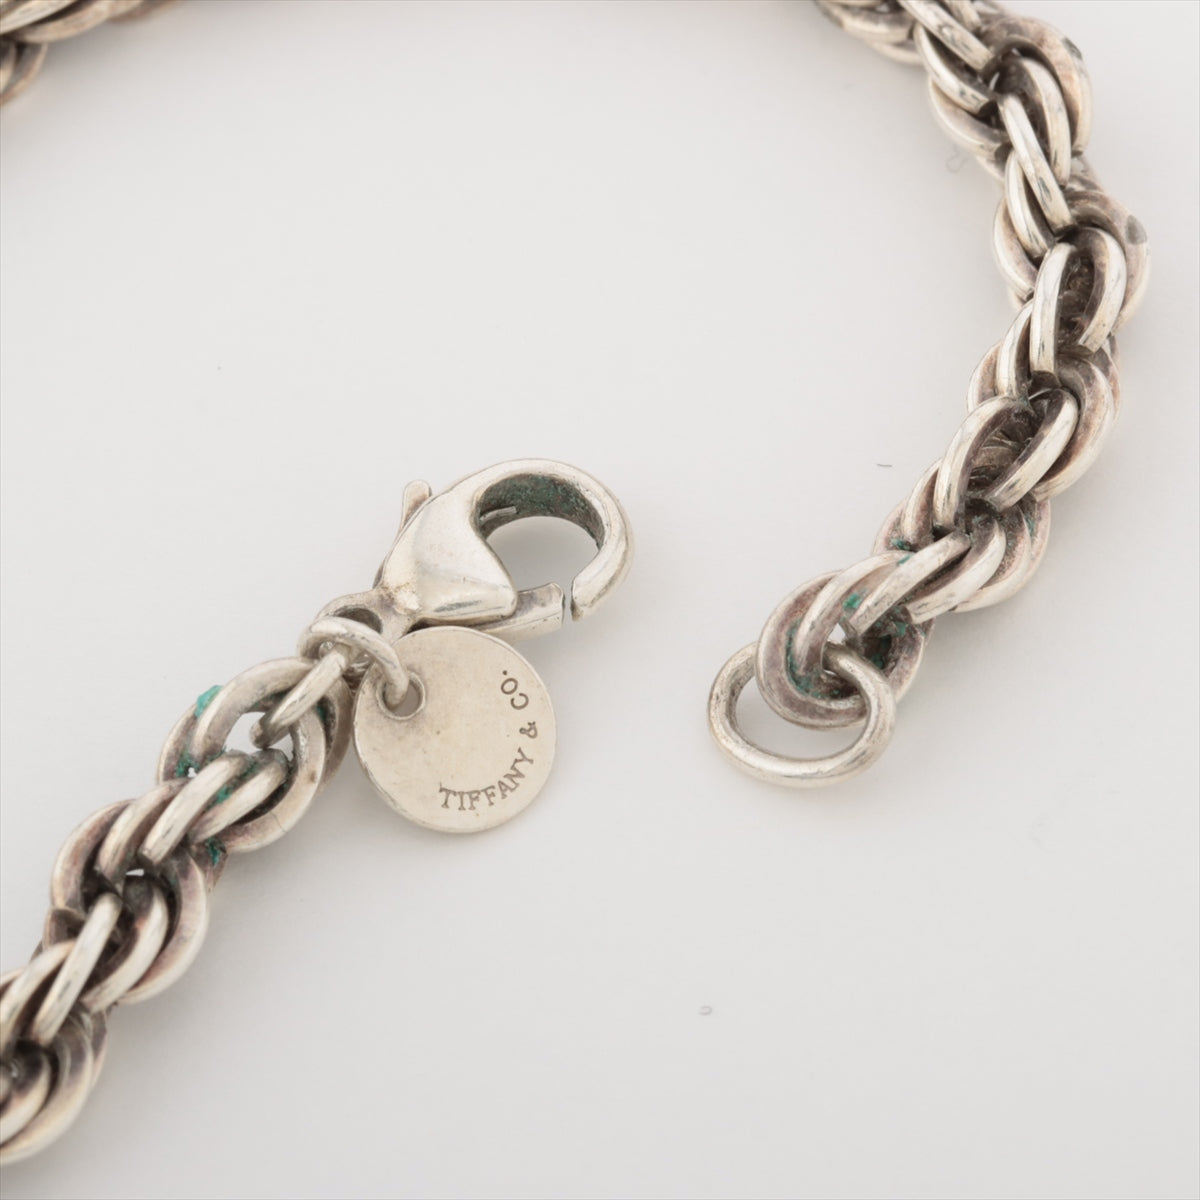 Tiffany Twist Bracelet 925 12.8g Silver